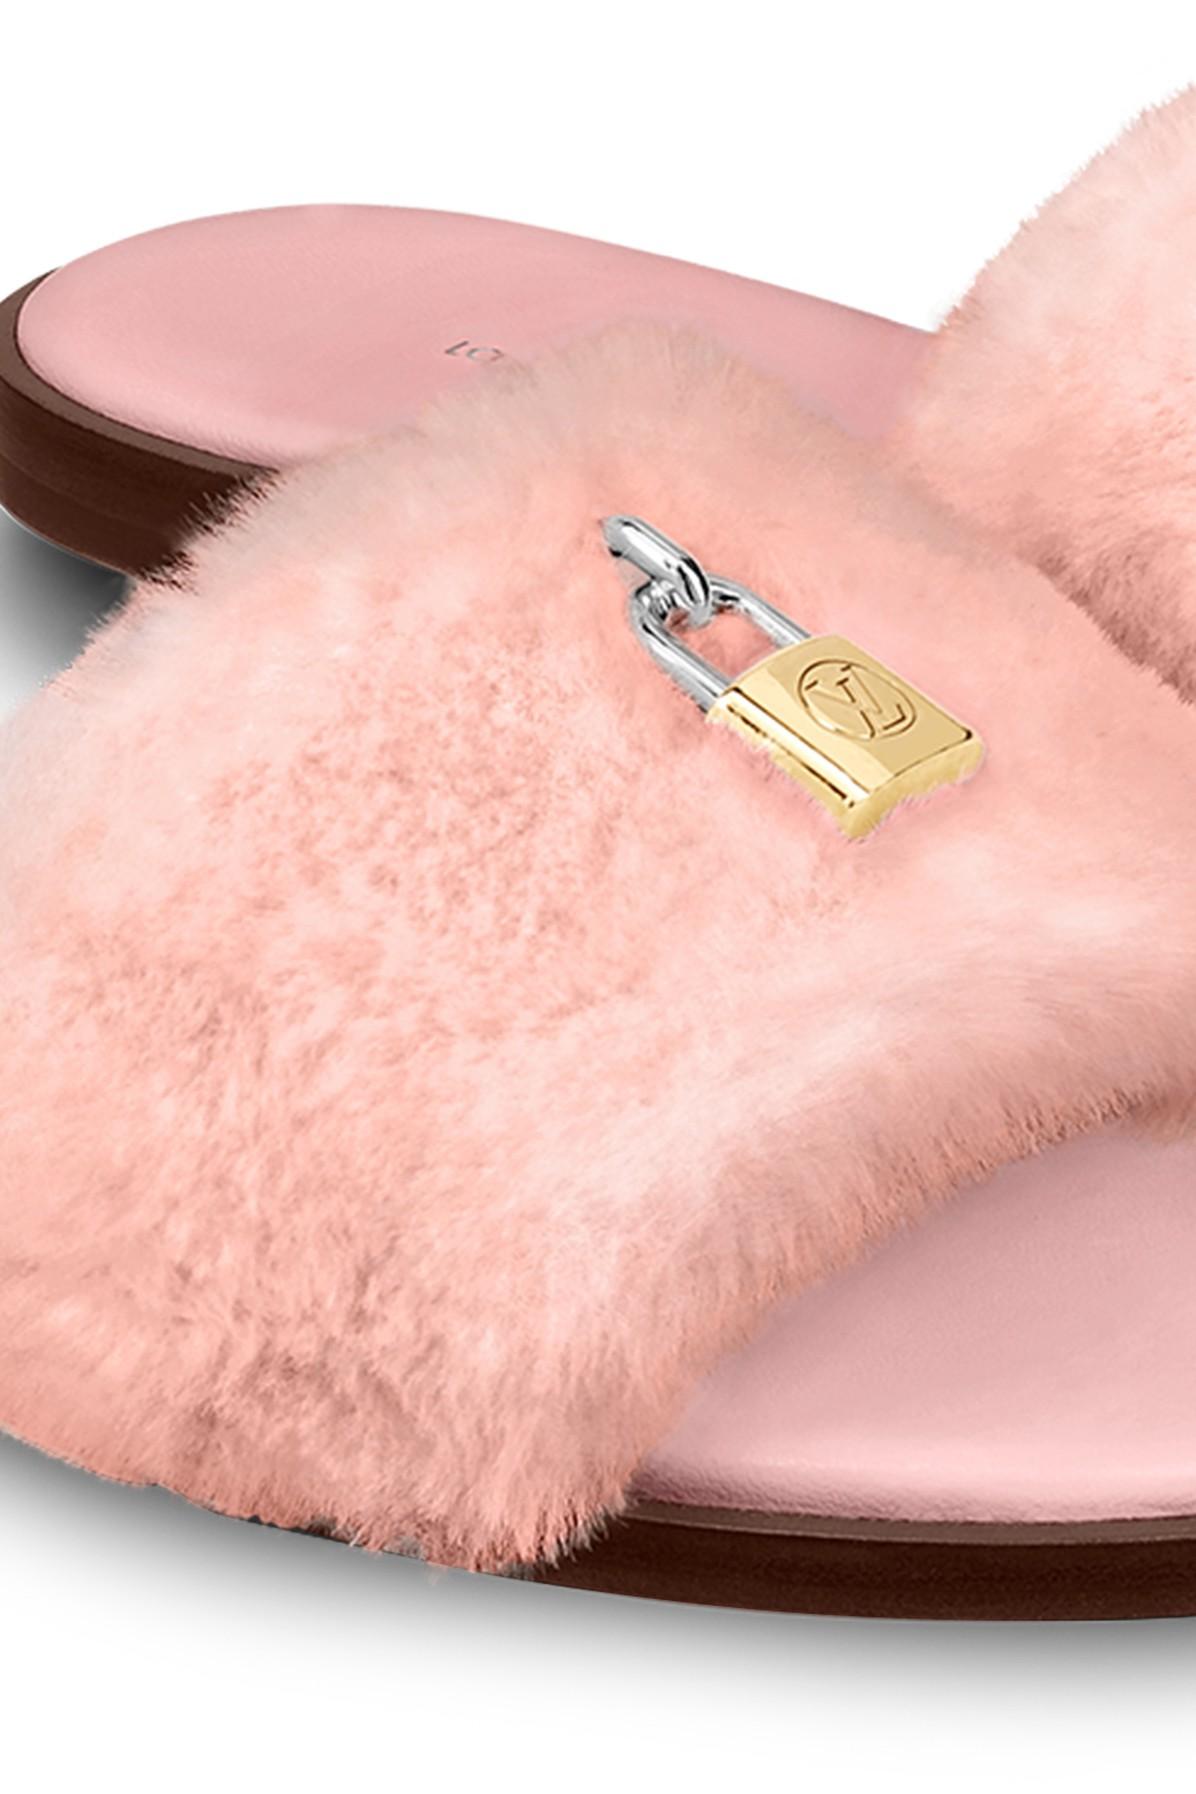 Louis Vuitton Pink/Red Mink Fur Lock It Flat Slide Sandals Size